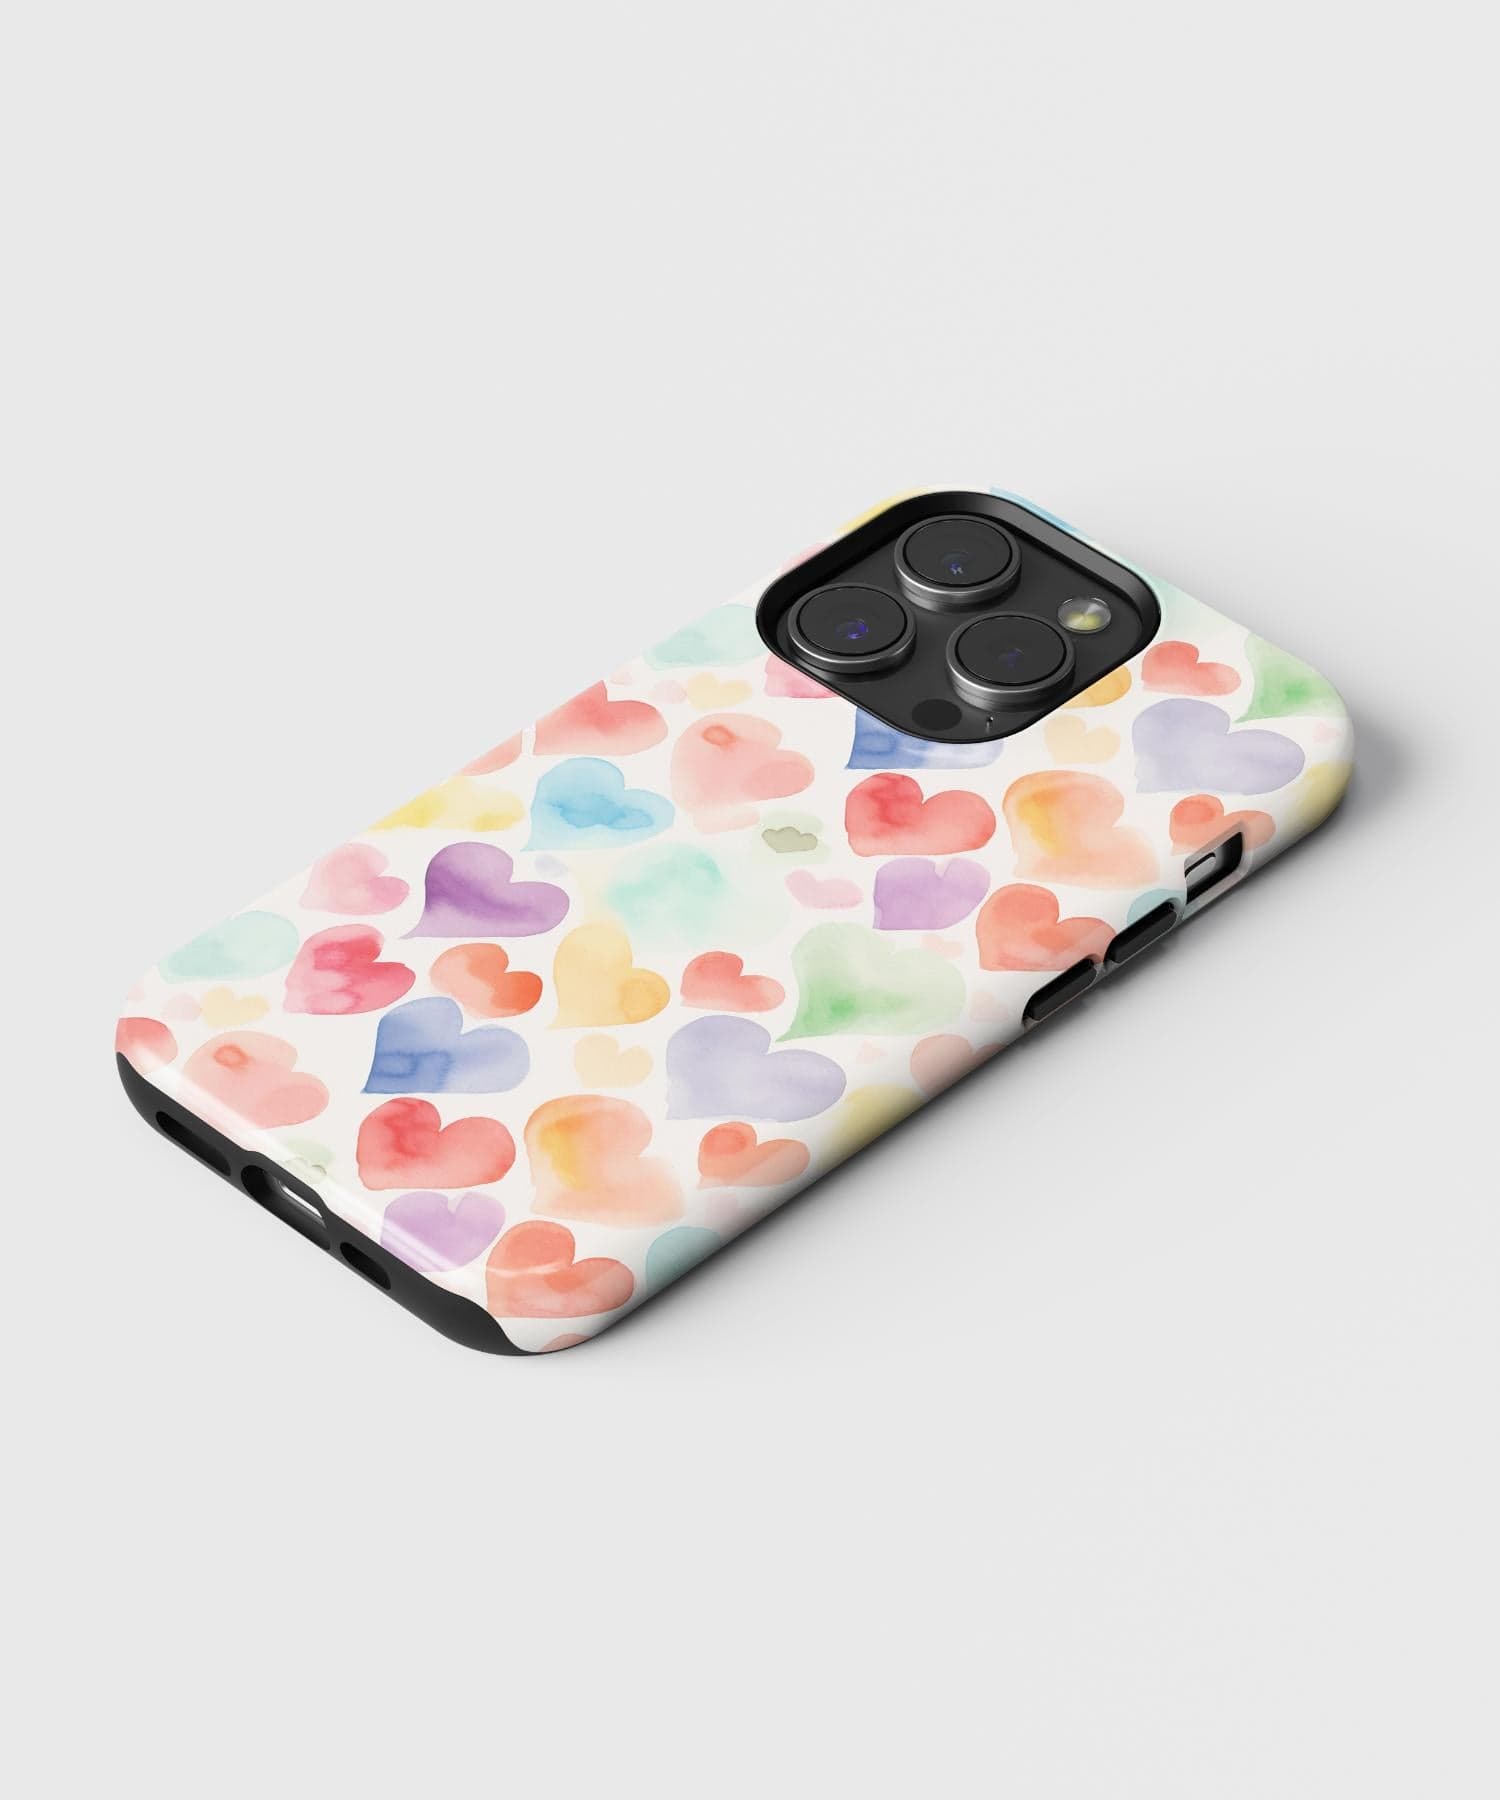 Pastel Heart iPhone Case